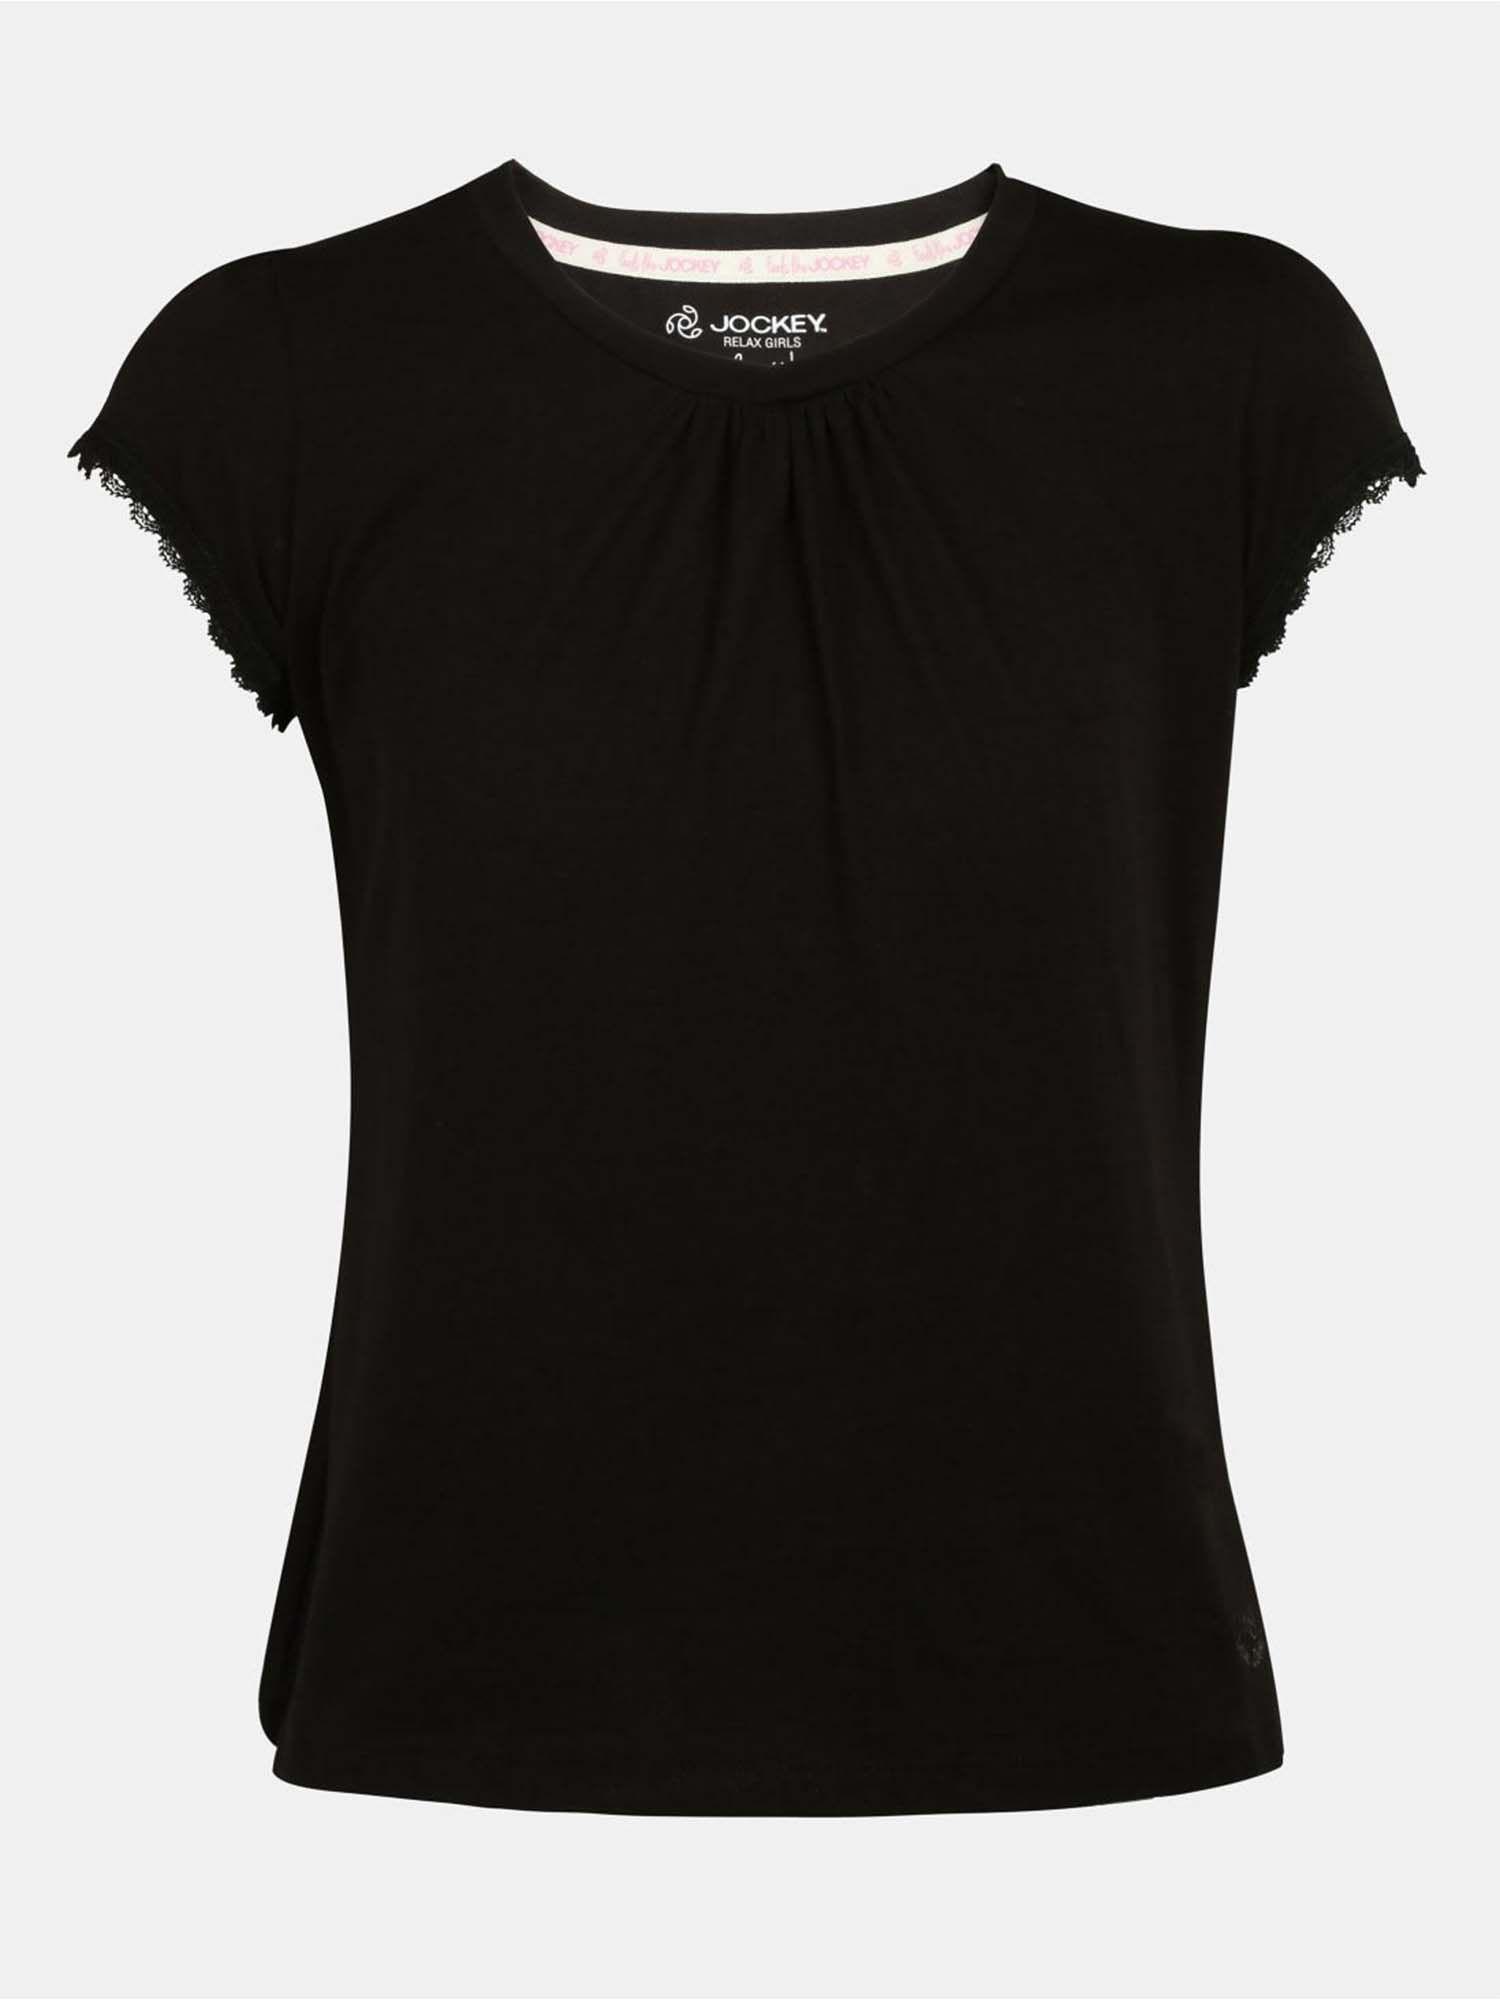 black t-shirt - style number - (rg01)